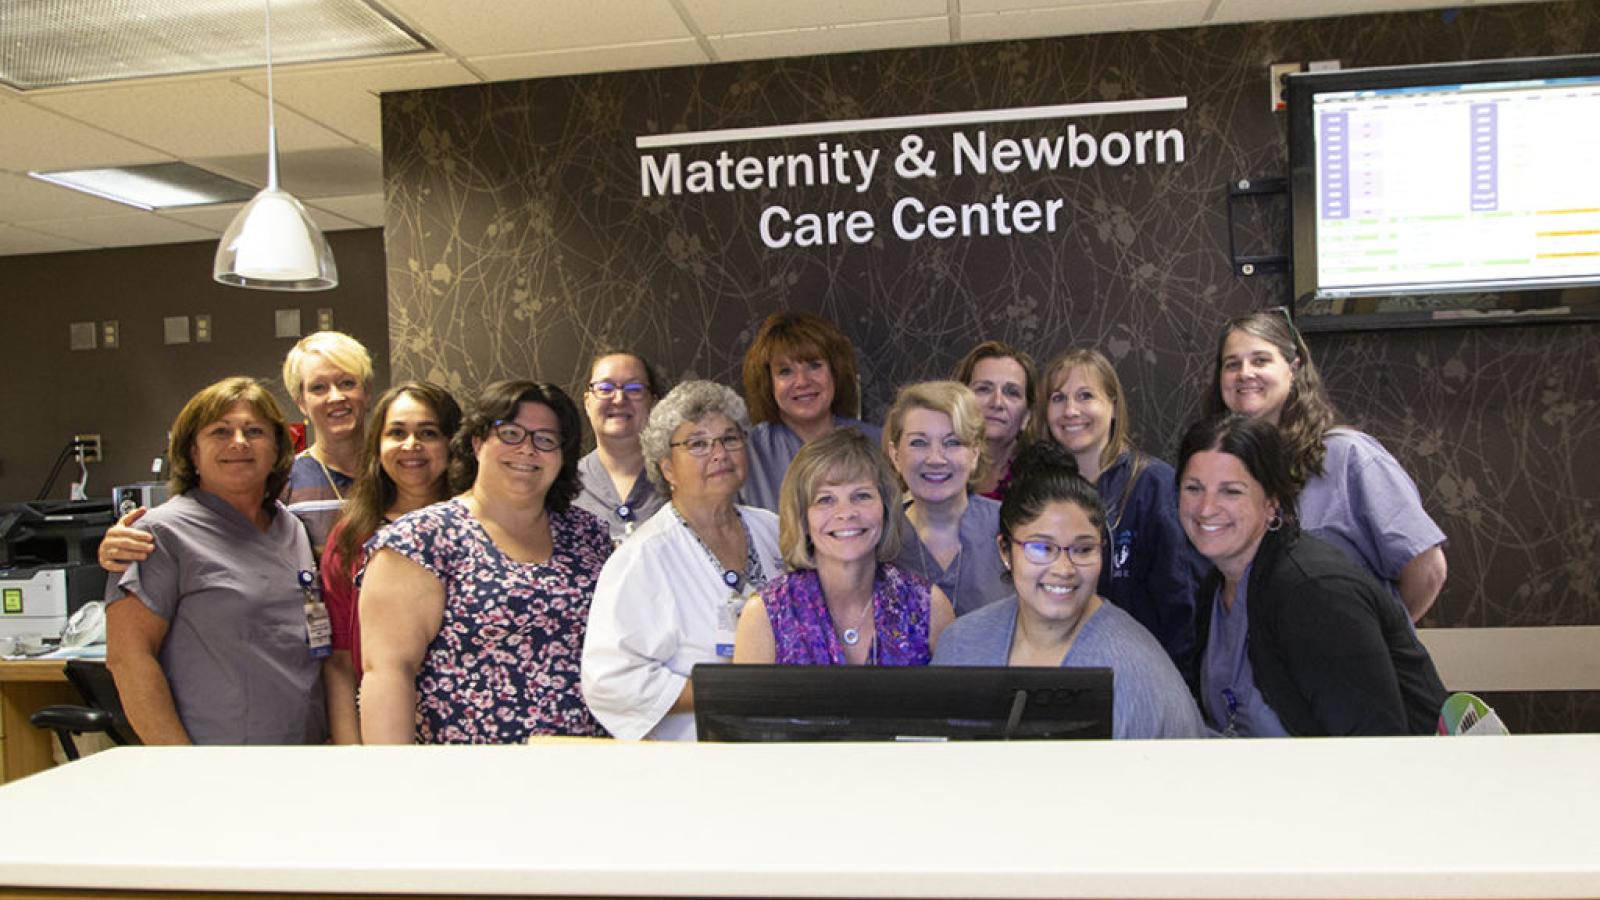 Maternity & Newborn Care Center Group Photo